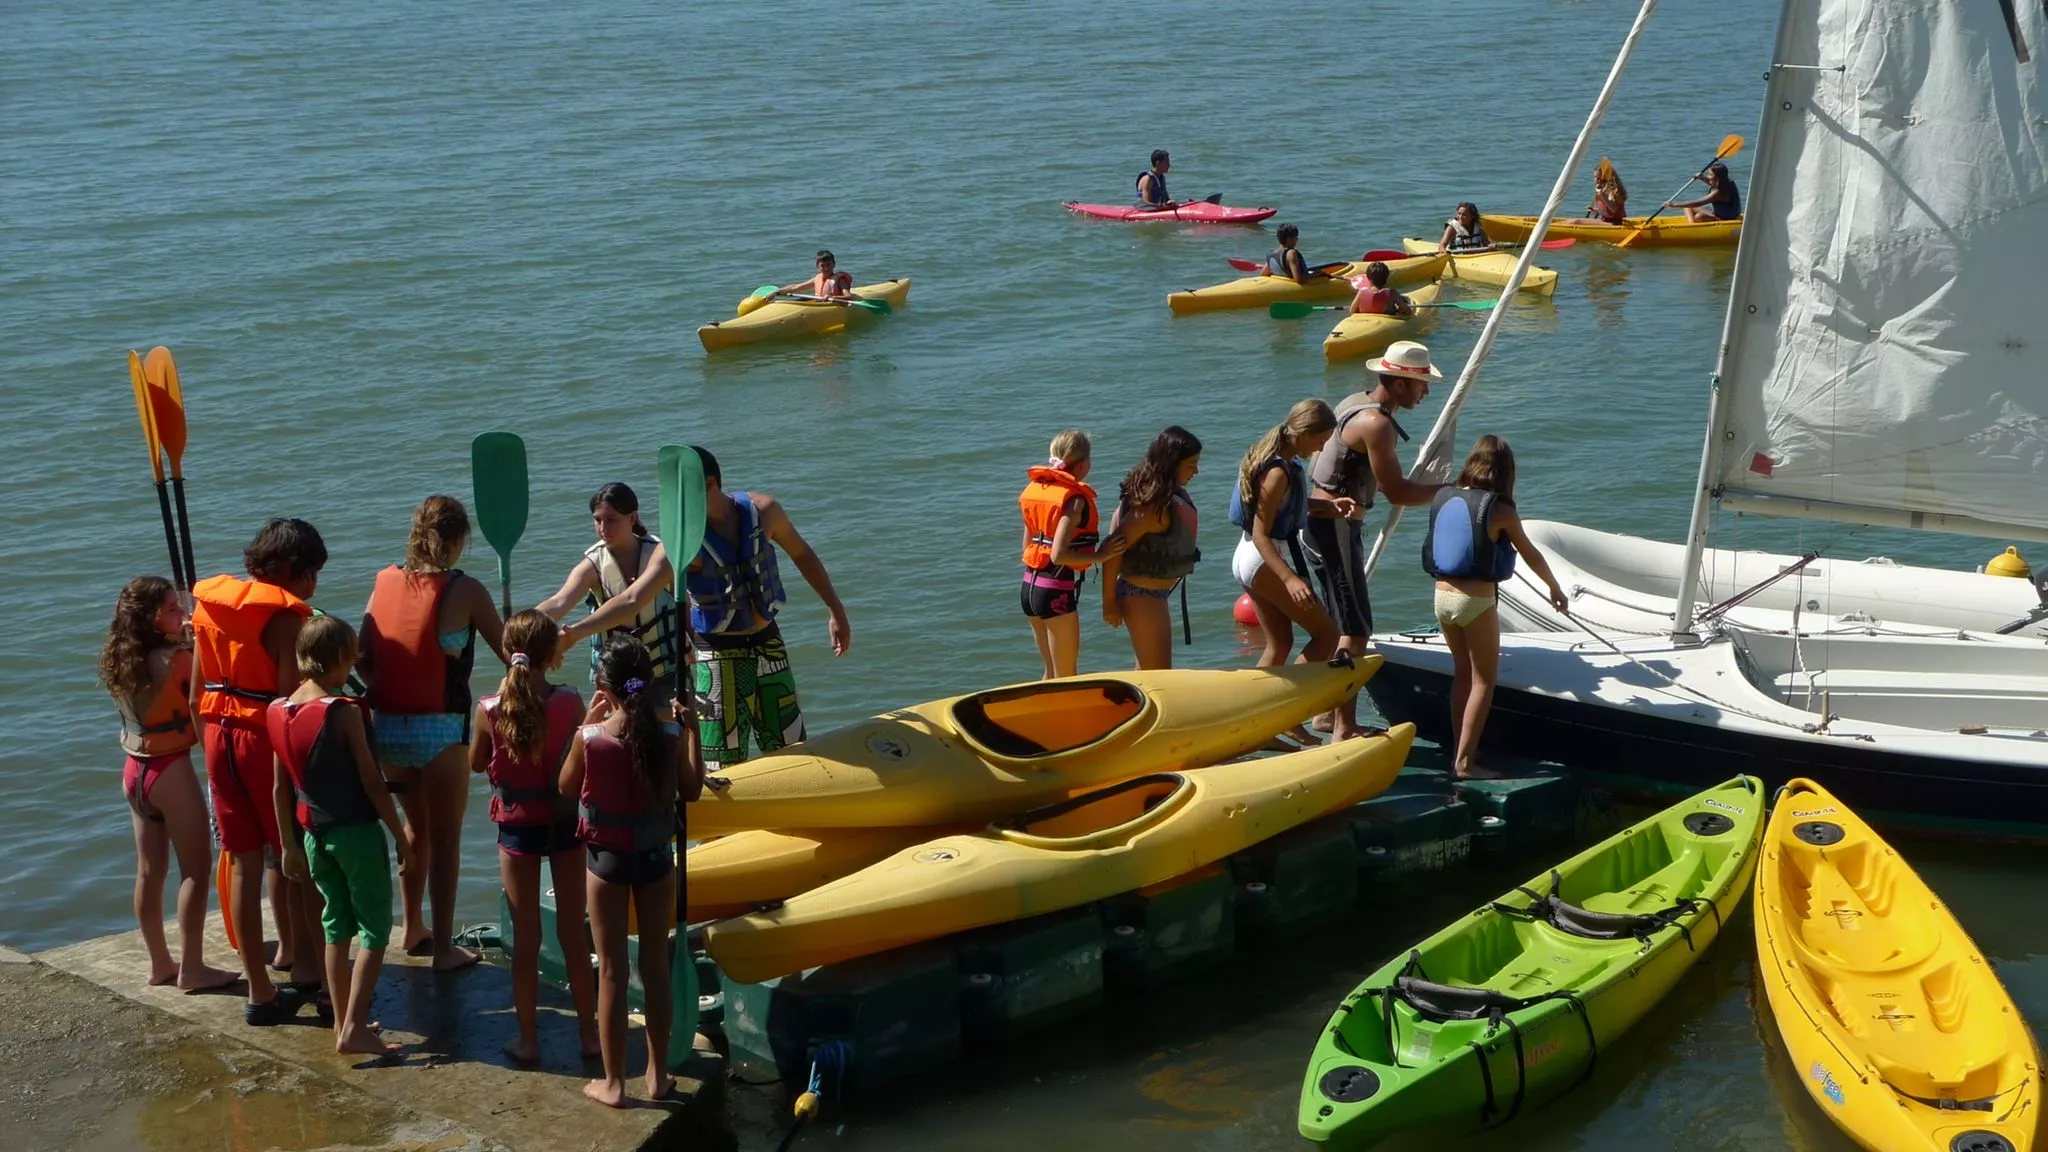 Centro Nautico de Sotogrande in Spain, Europe | Kayaking & Canoeing,Windsurfing - Rated 1